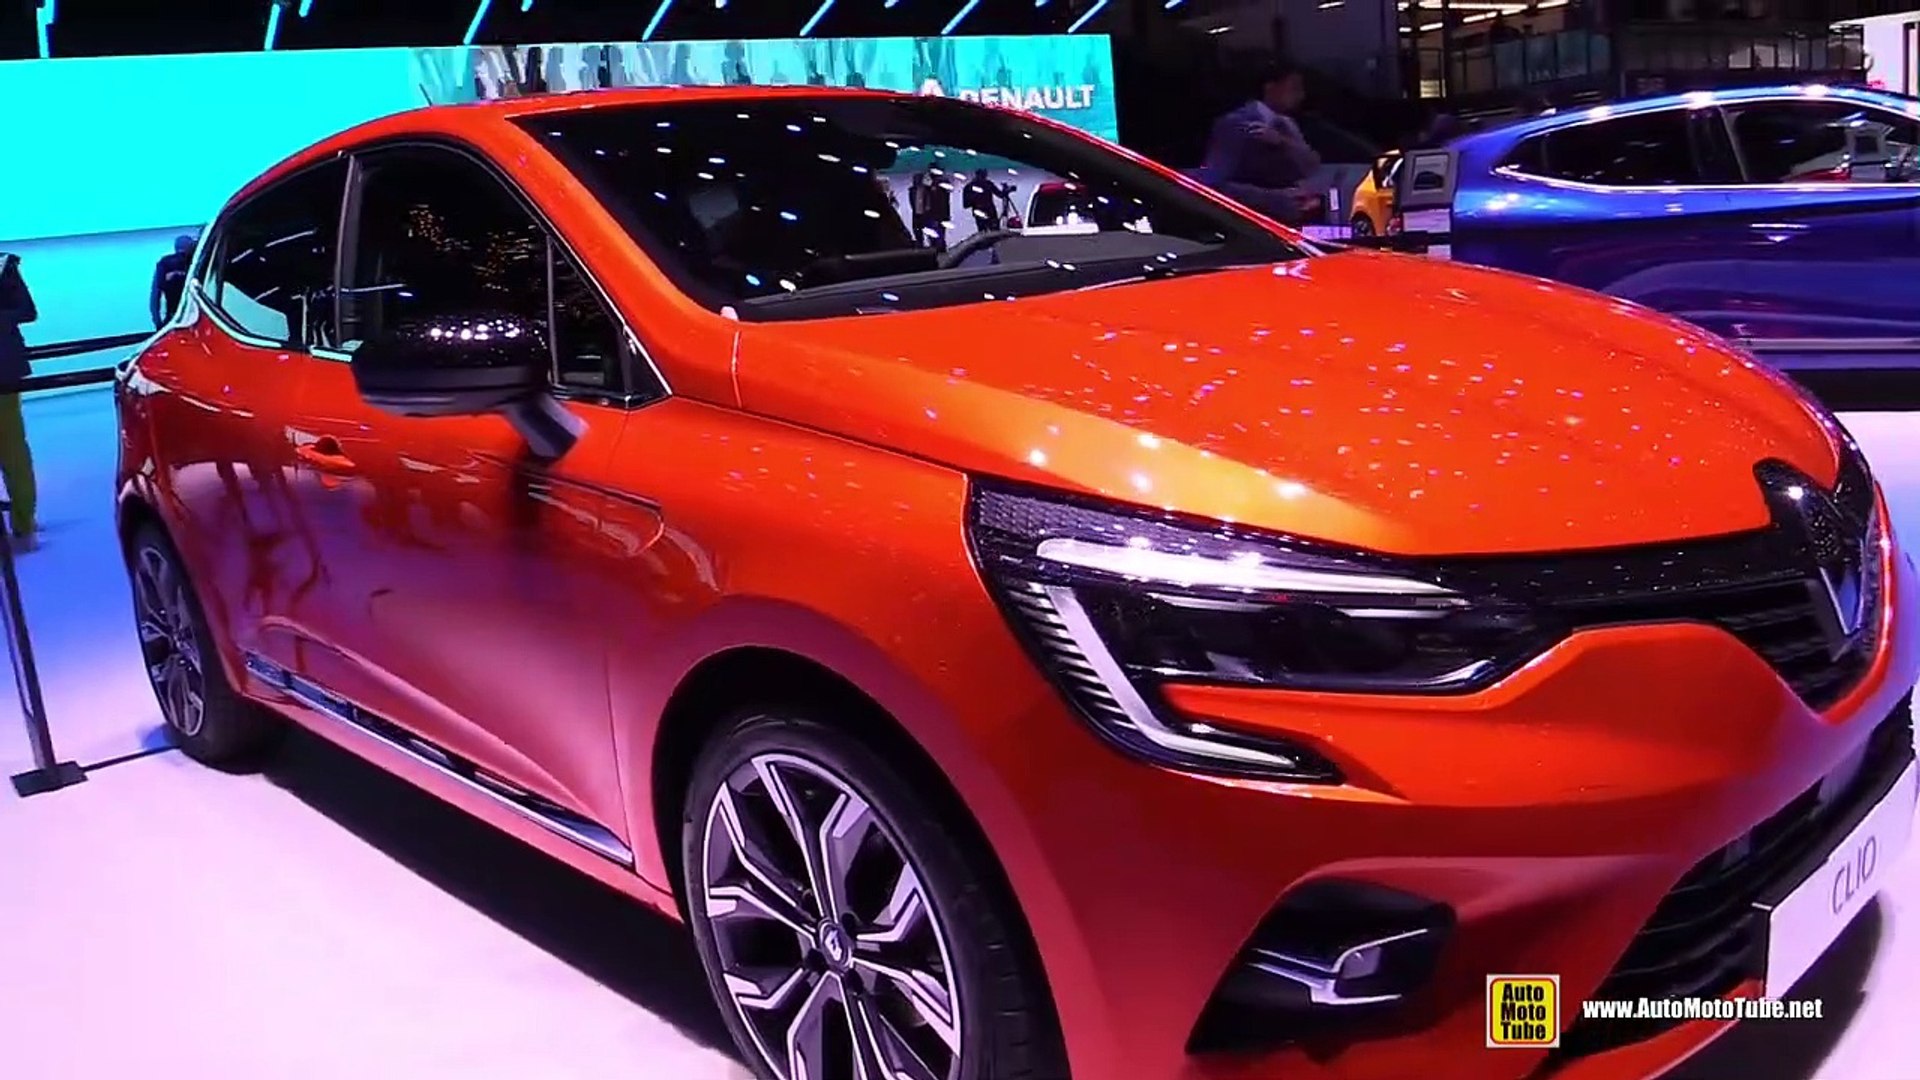 2020 Renault Clio - Exterior and Interior Walkaround - Debut at 2019 Geneva  Motor Show - video Dailymotion